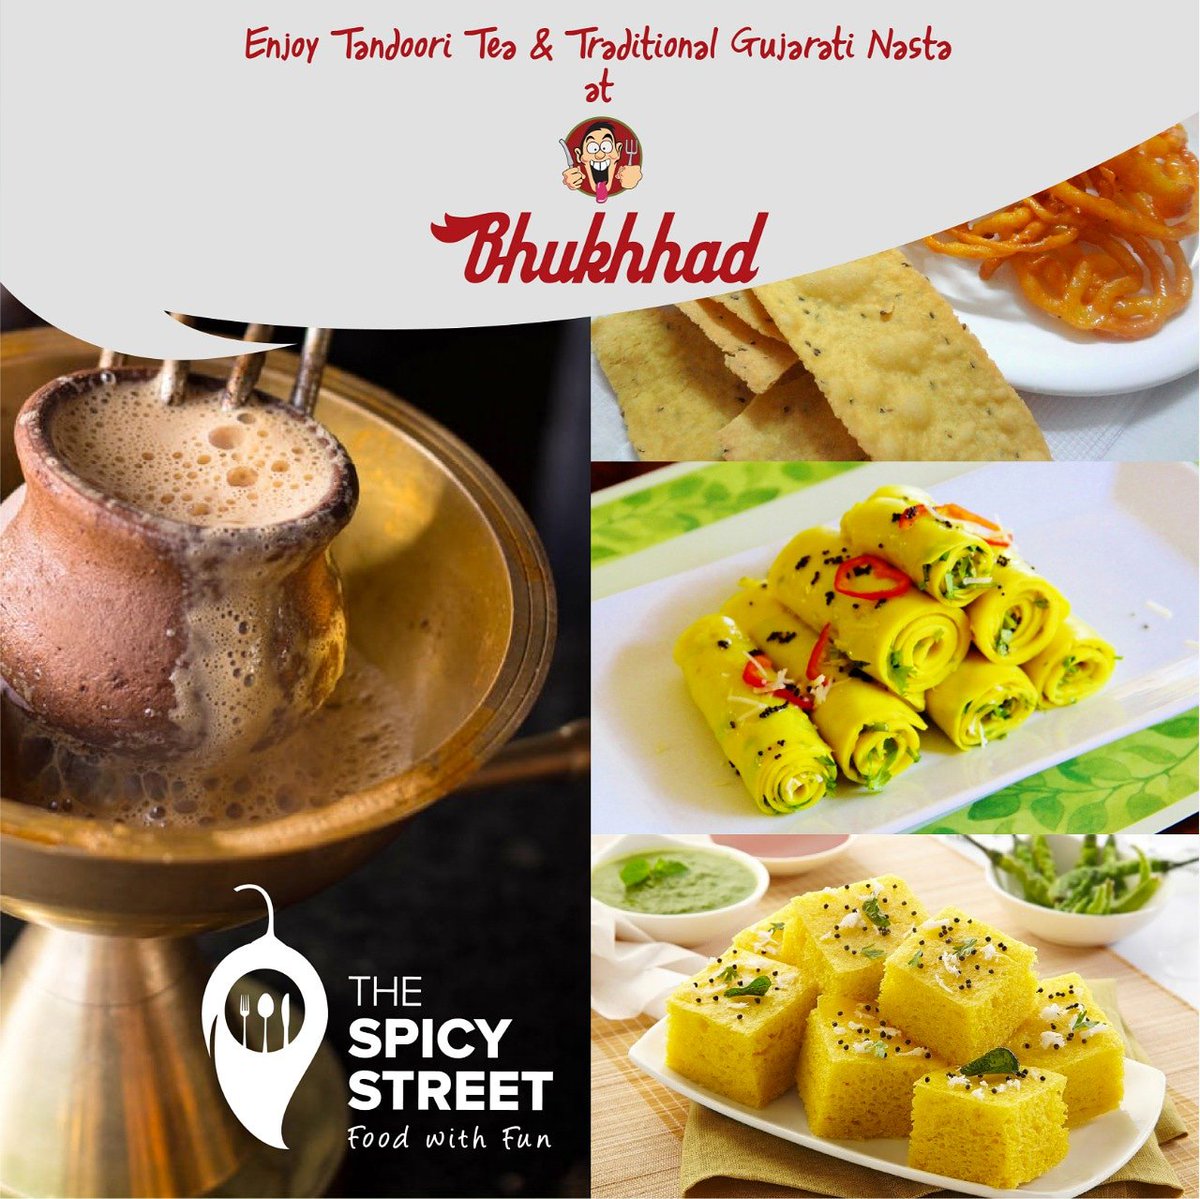 Do you love Khaman & Dhokla?
Try our Traditional & Gujarati Nasta at The Spicy Street available at Bhukhhad !!
.
.
#chai #tandoorichai #khaman #dhokla #gujaratithali #gujaratifood #gujaratinasto #punjabifood #pakkogujarati #foodpics #foodcourt #foodtruck #foods #foodstagram